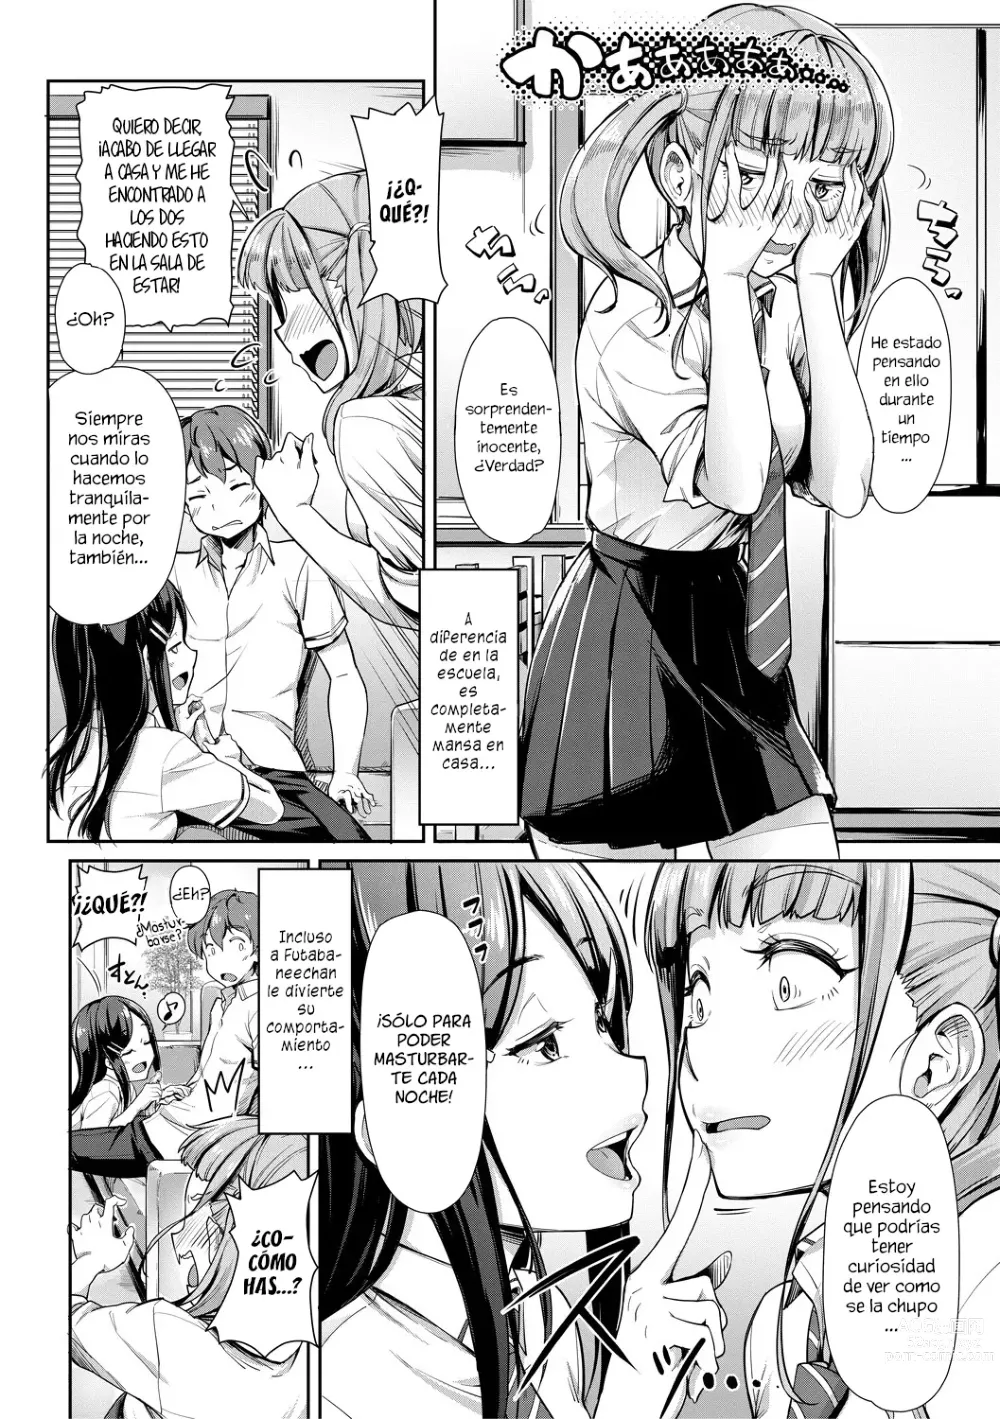 Page 7 of manga ¡Nee! ¡Nee! ¡Chantoshiyo!